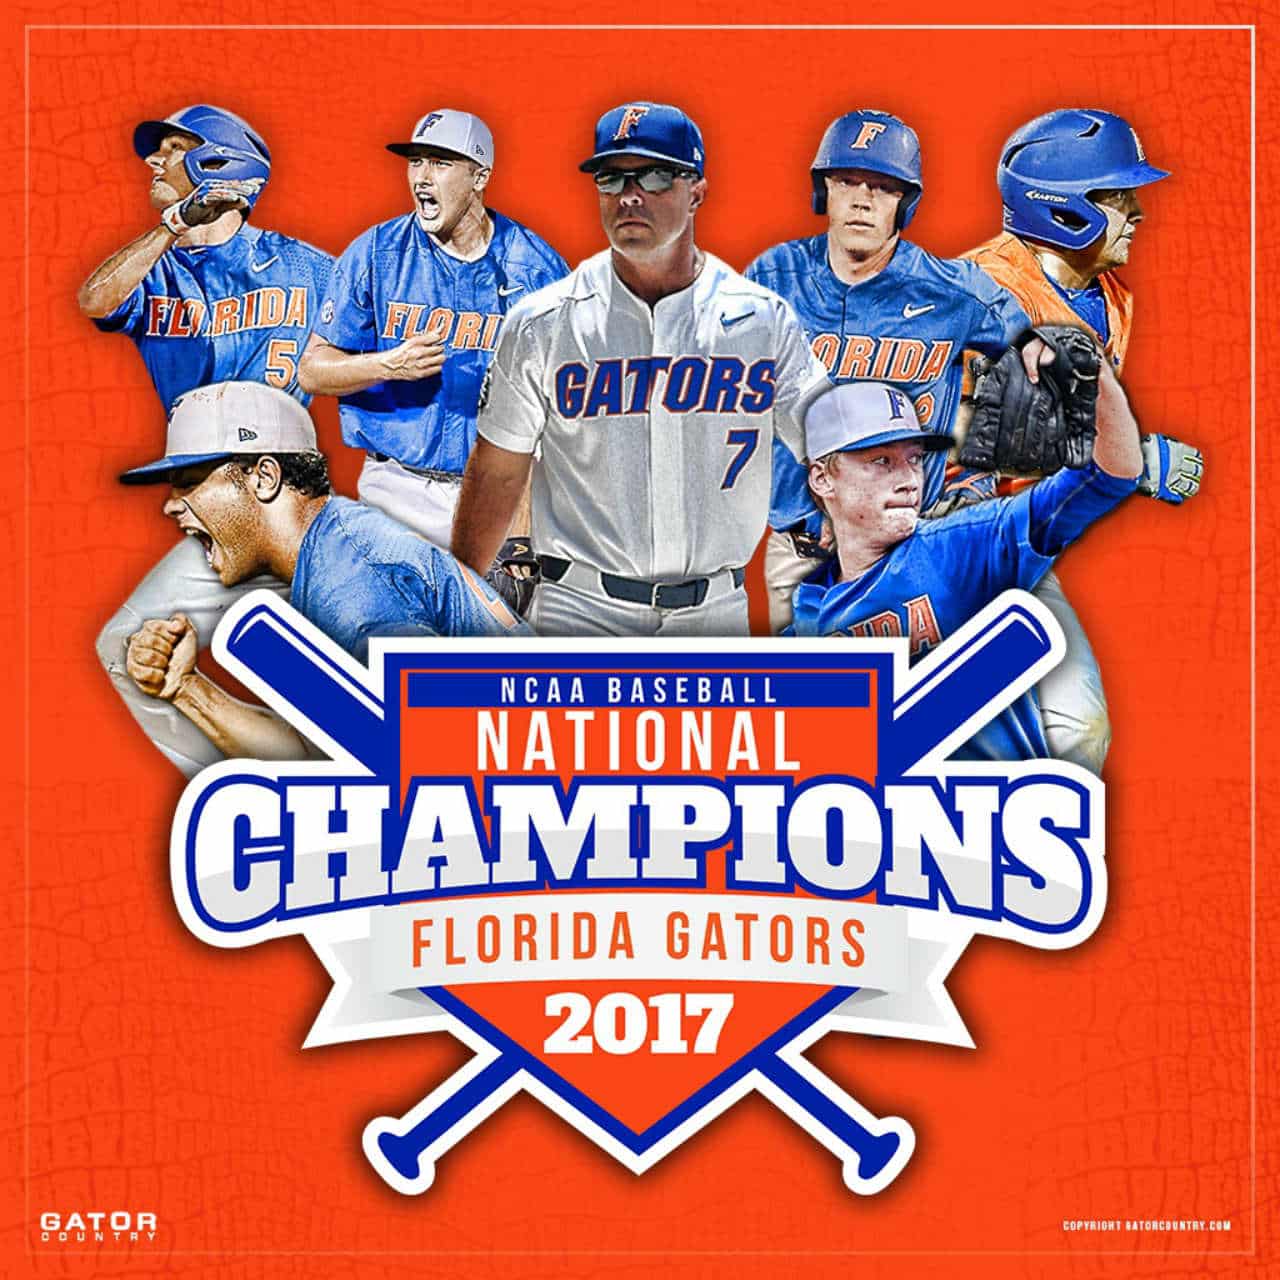 Florida Gators baseball wins national championship